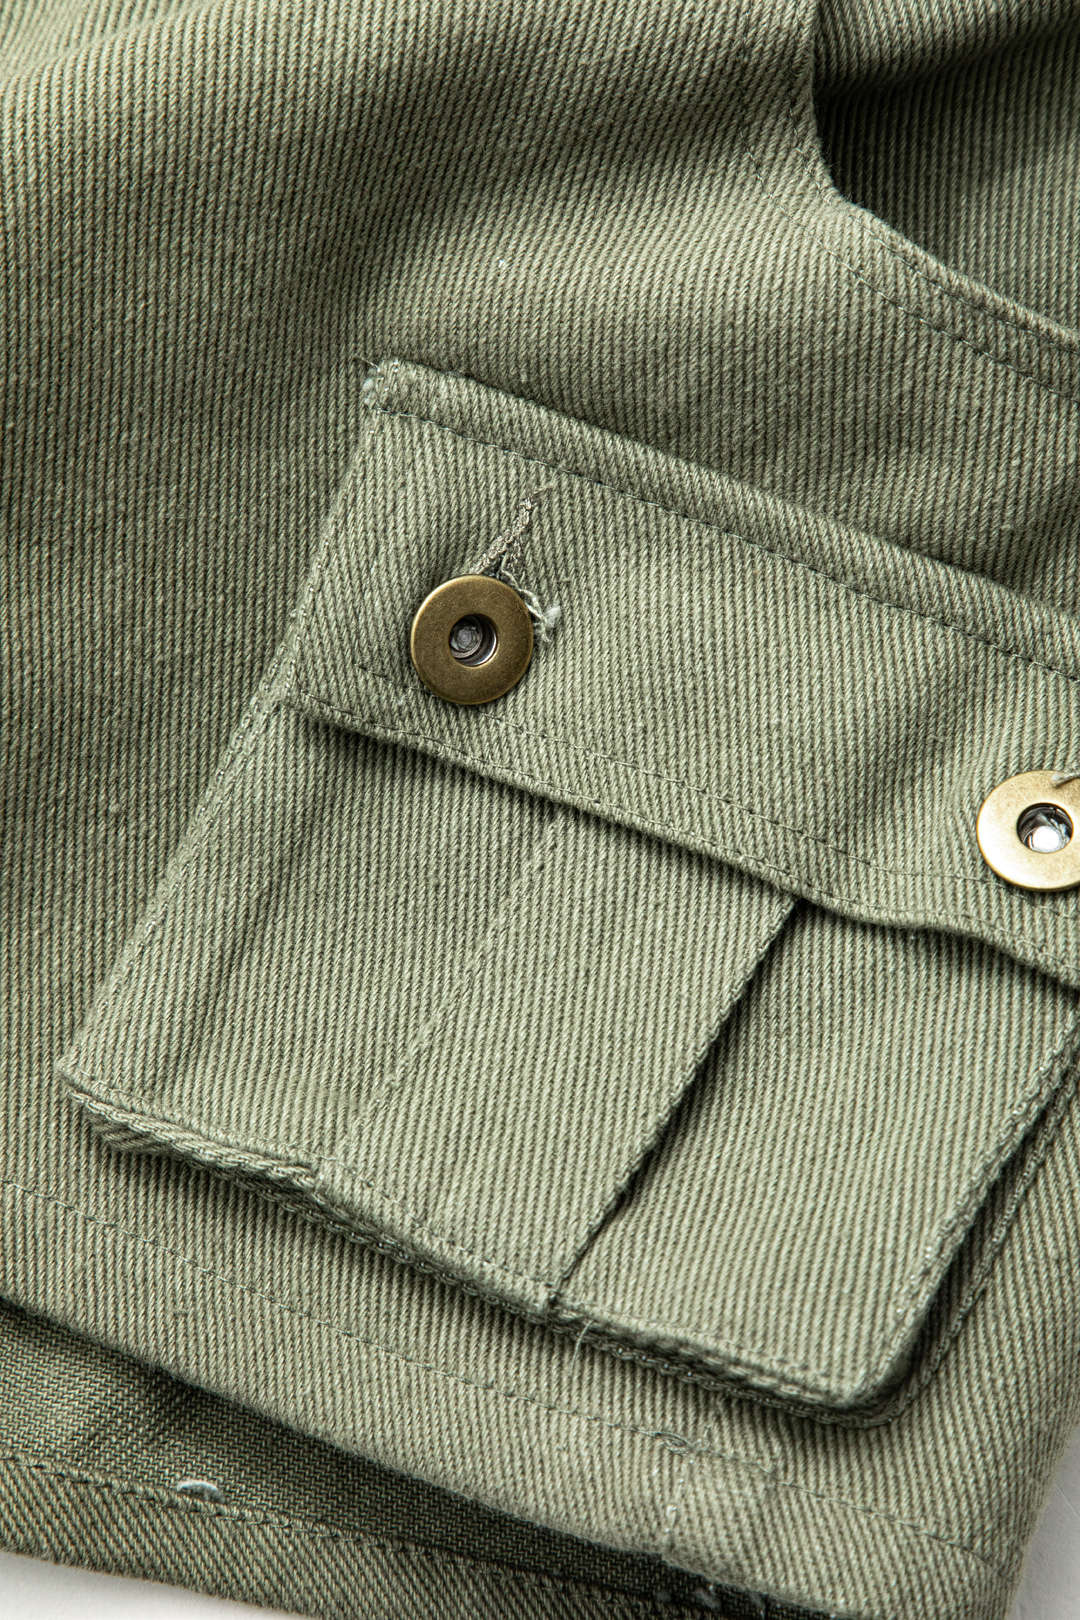 Flap Pocket Tie Cargo Mini Skirt